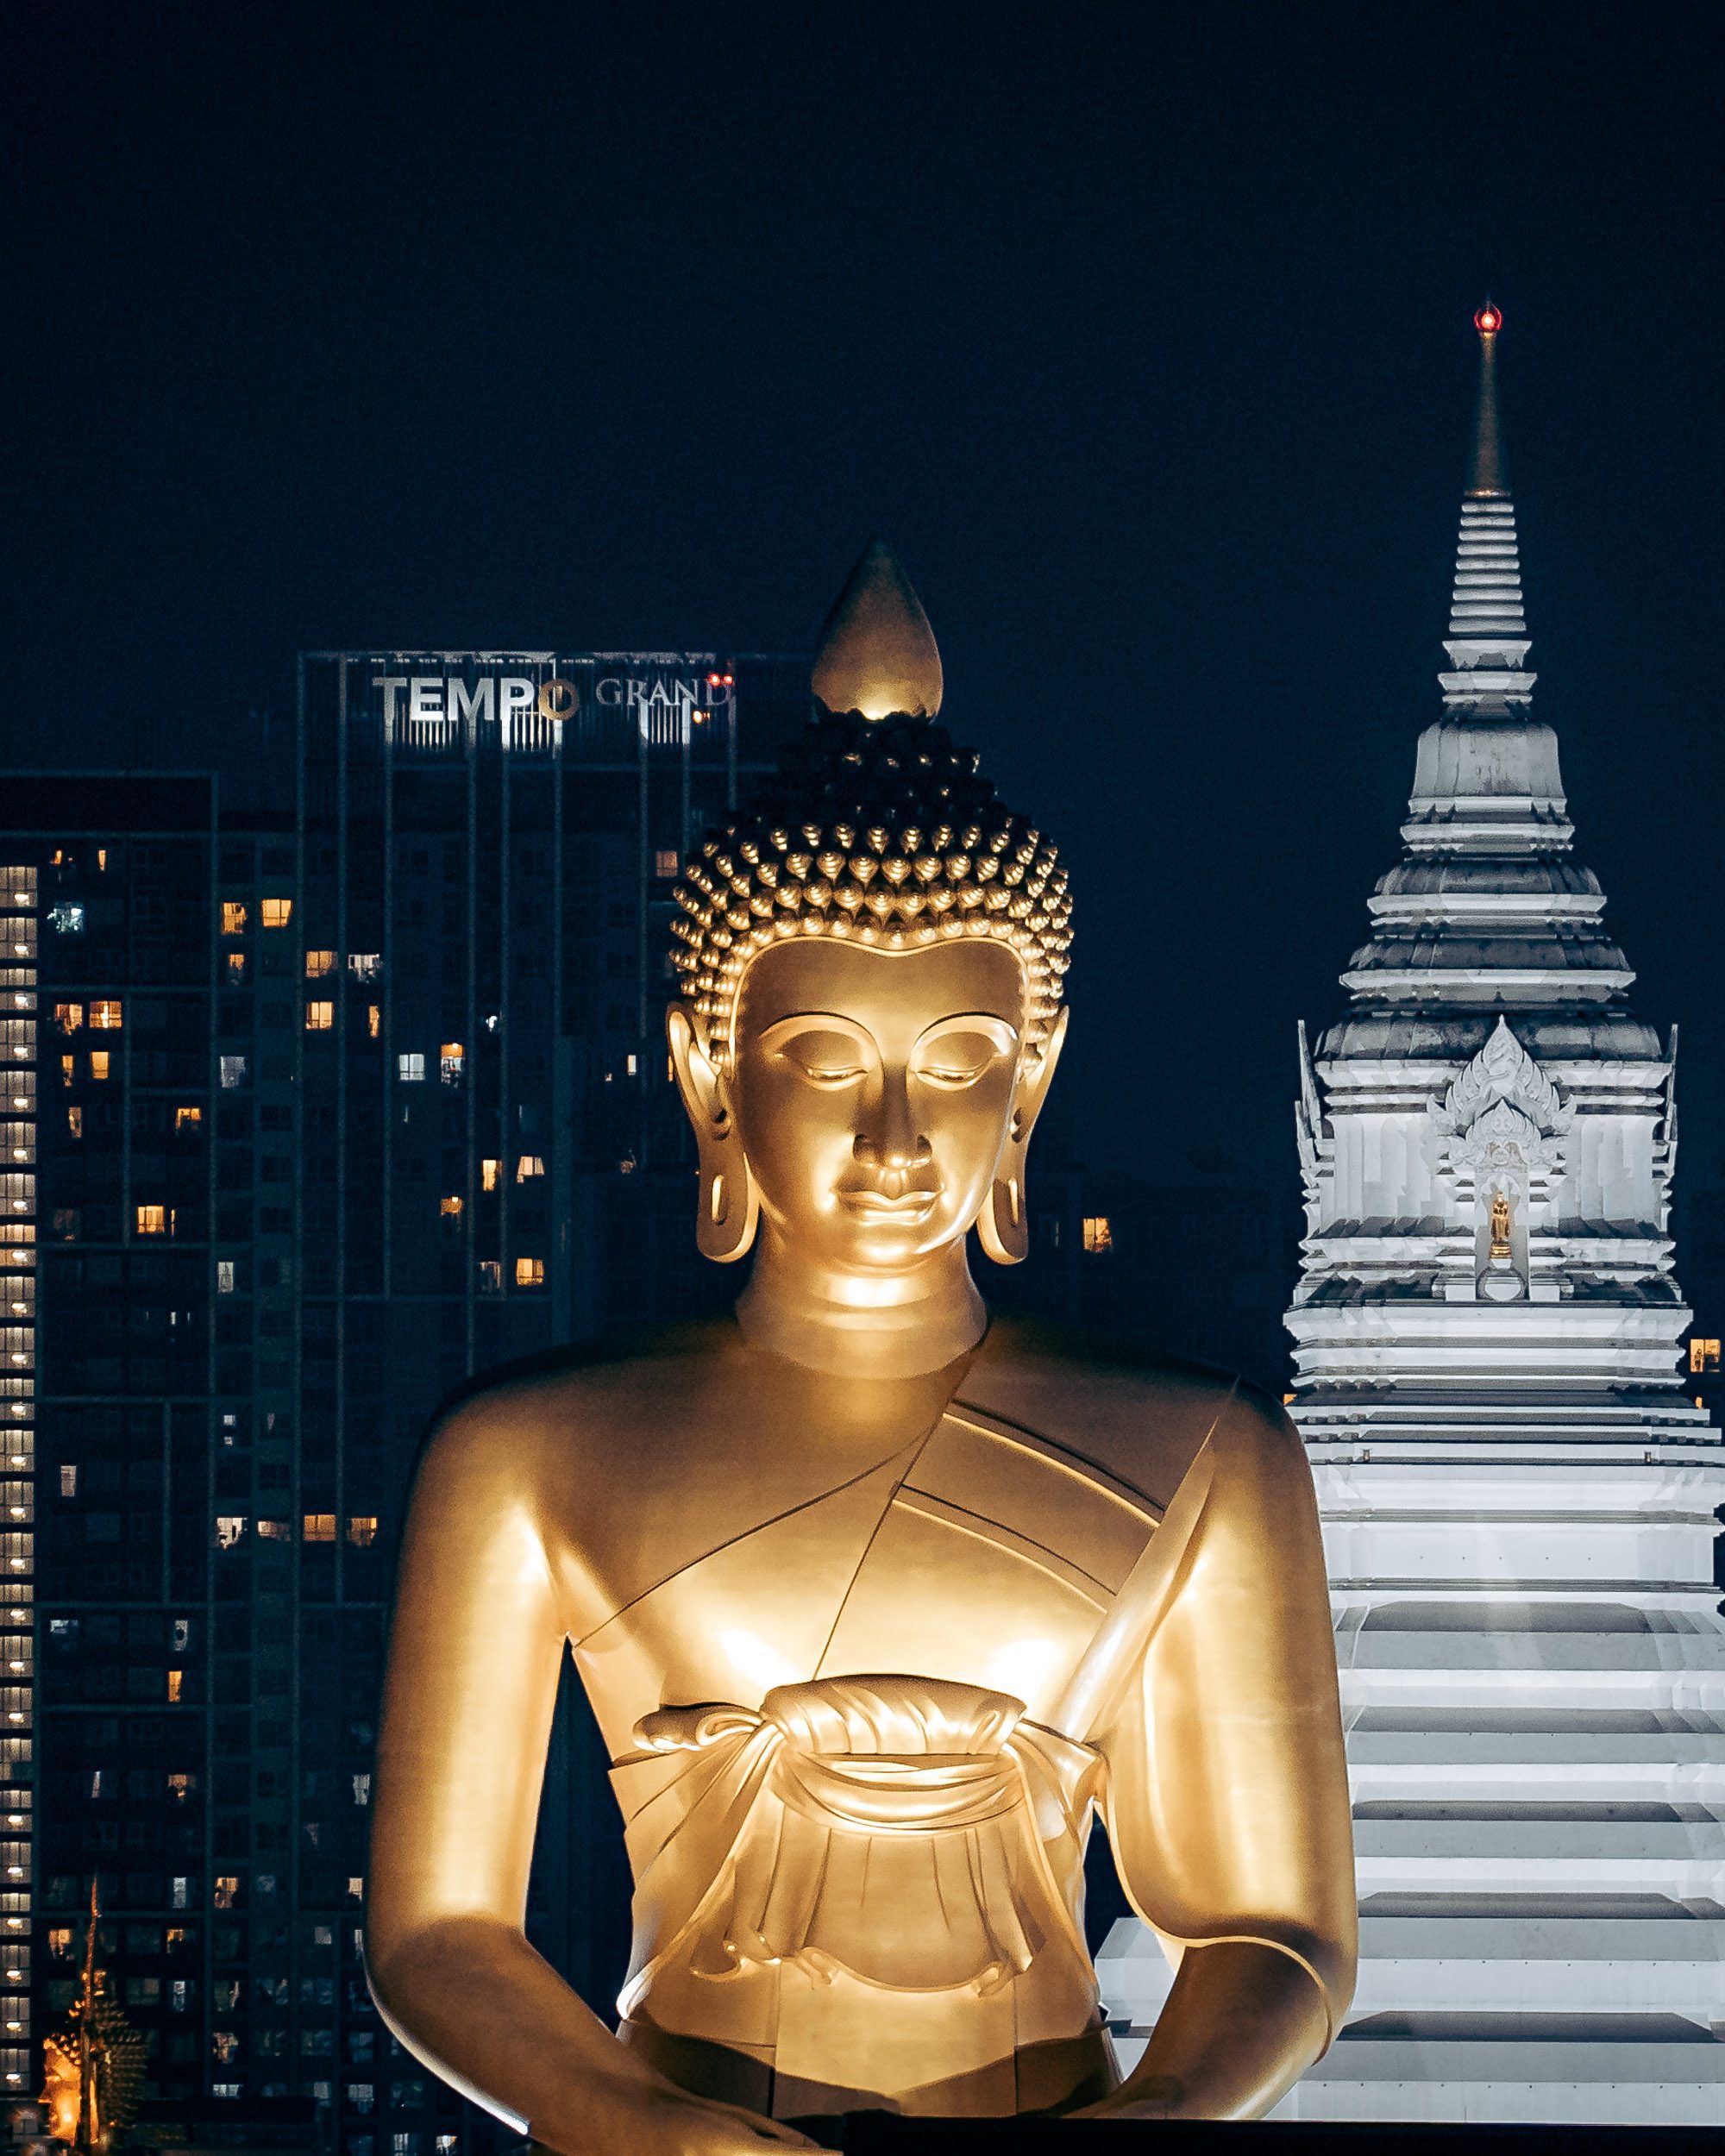 7 Best Photography Spots in Bangkok - Big Buddha